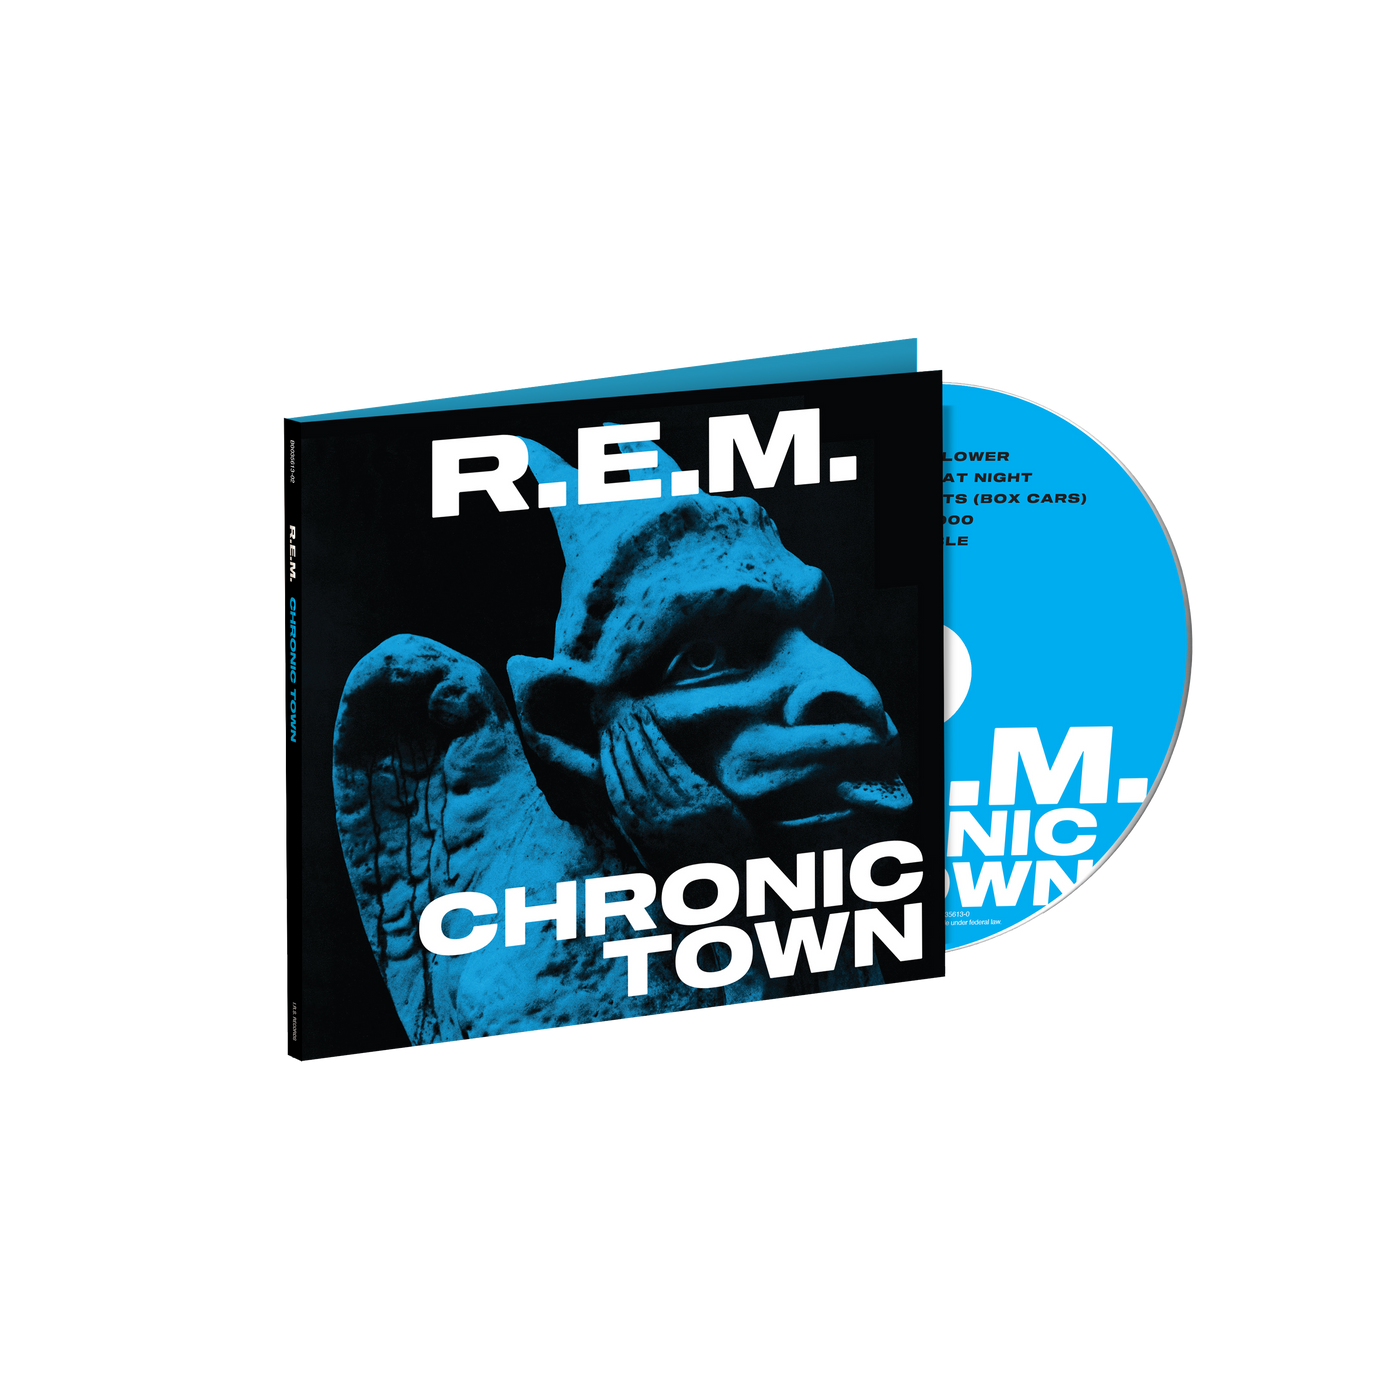 Chronic Town (CD)